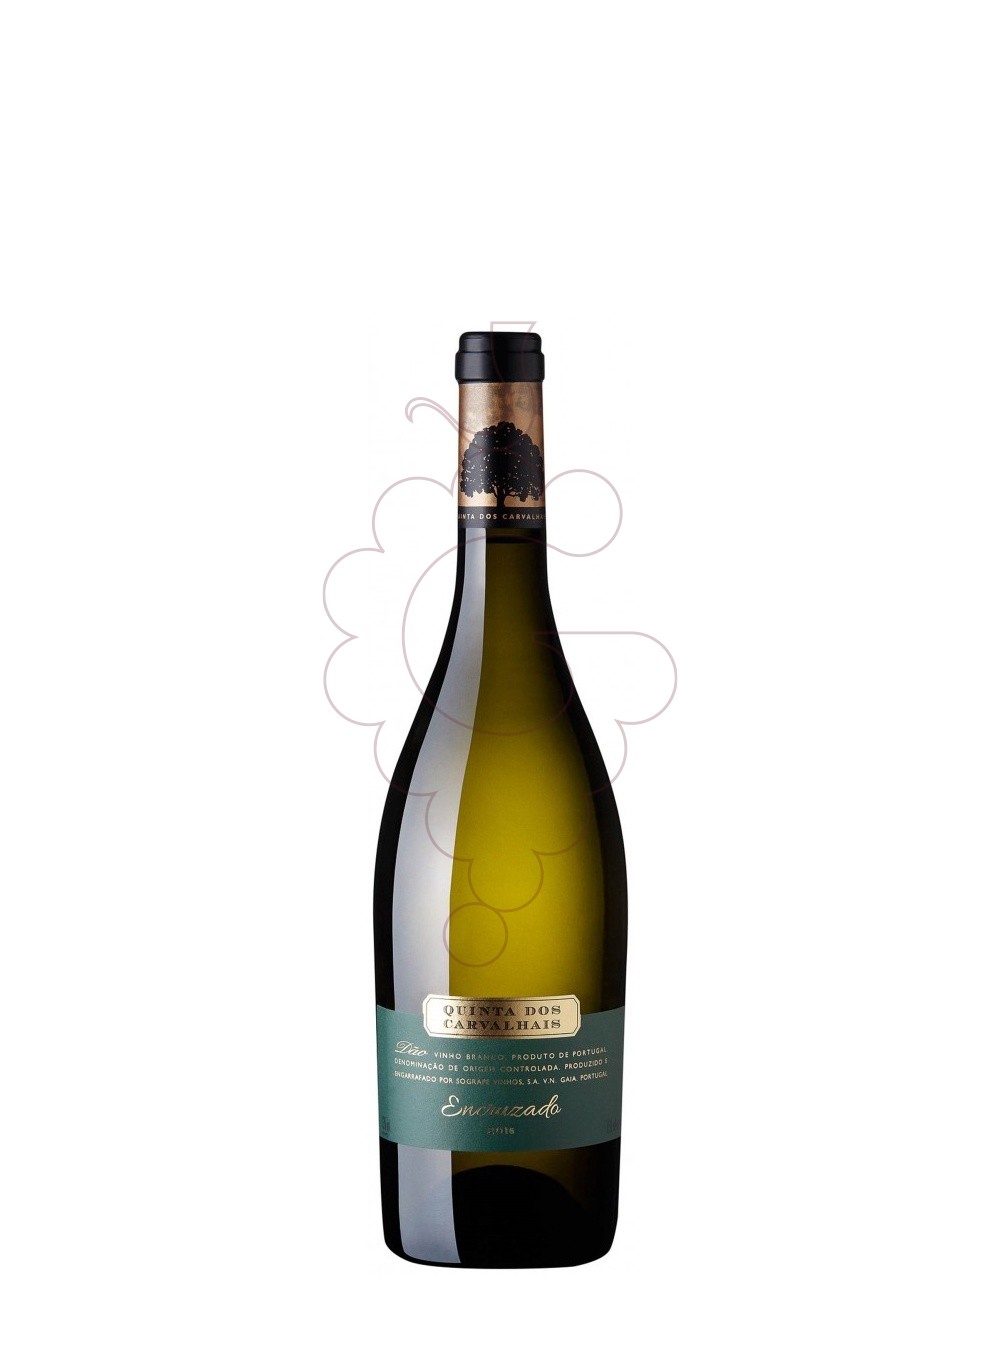 Foto Carvalhais encruzado bco 2021 vino blanco